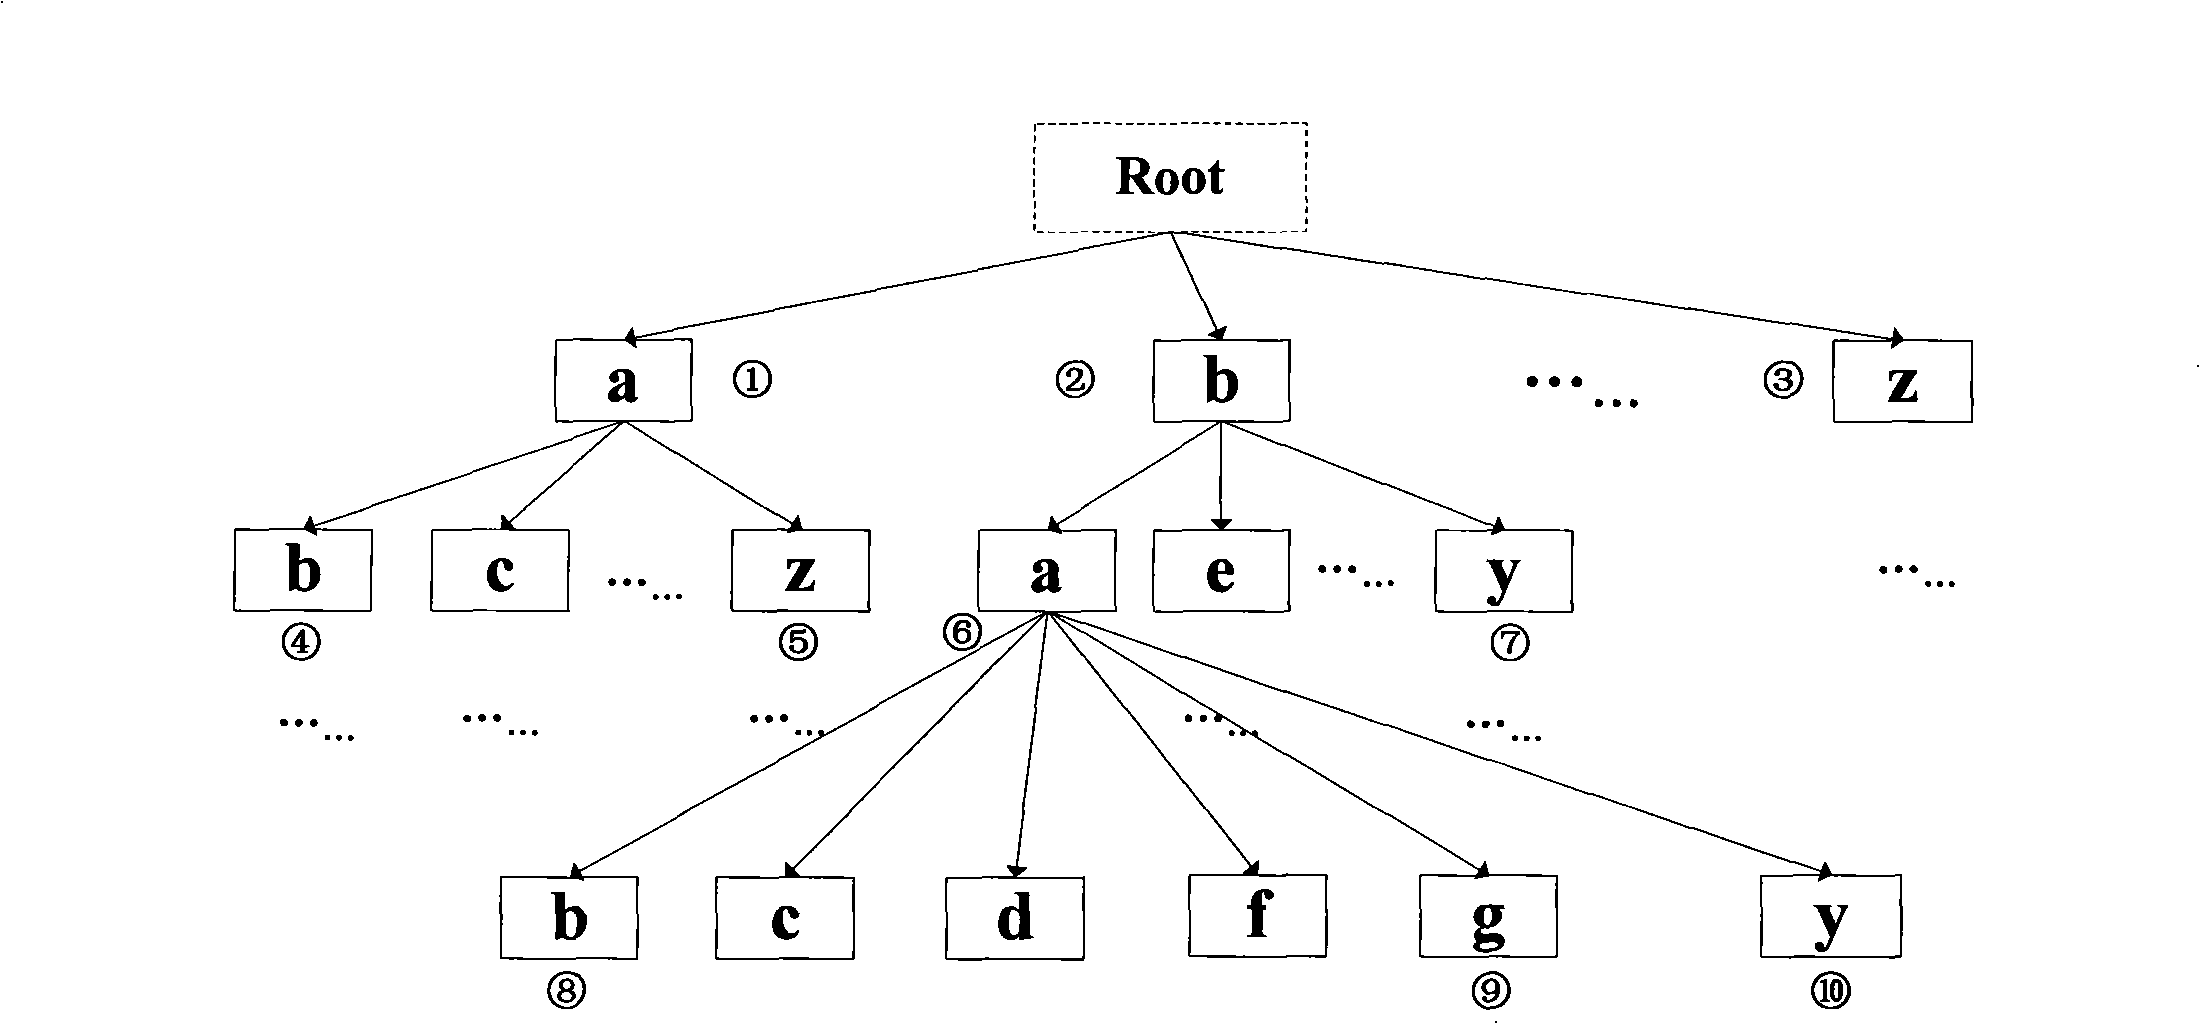 Electronic dictionary work retrieval method based on self-adapting dictionary tree